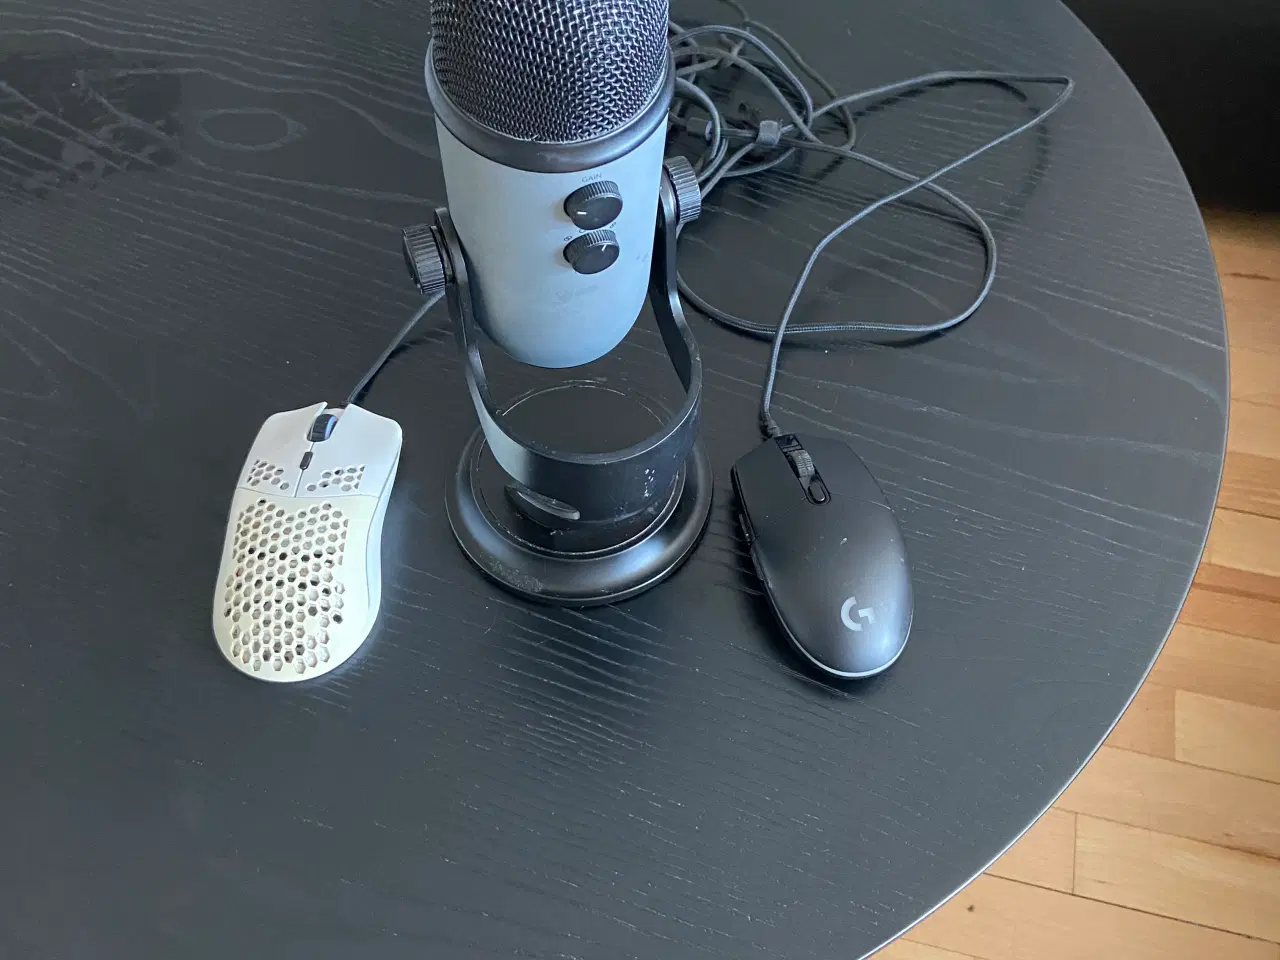 Billede 4 - Gamerstol, 2 mus og mikrofon